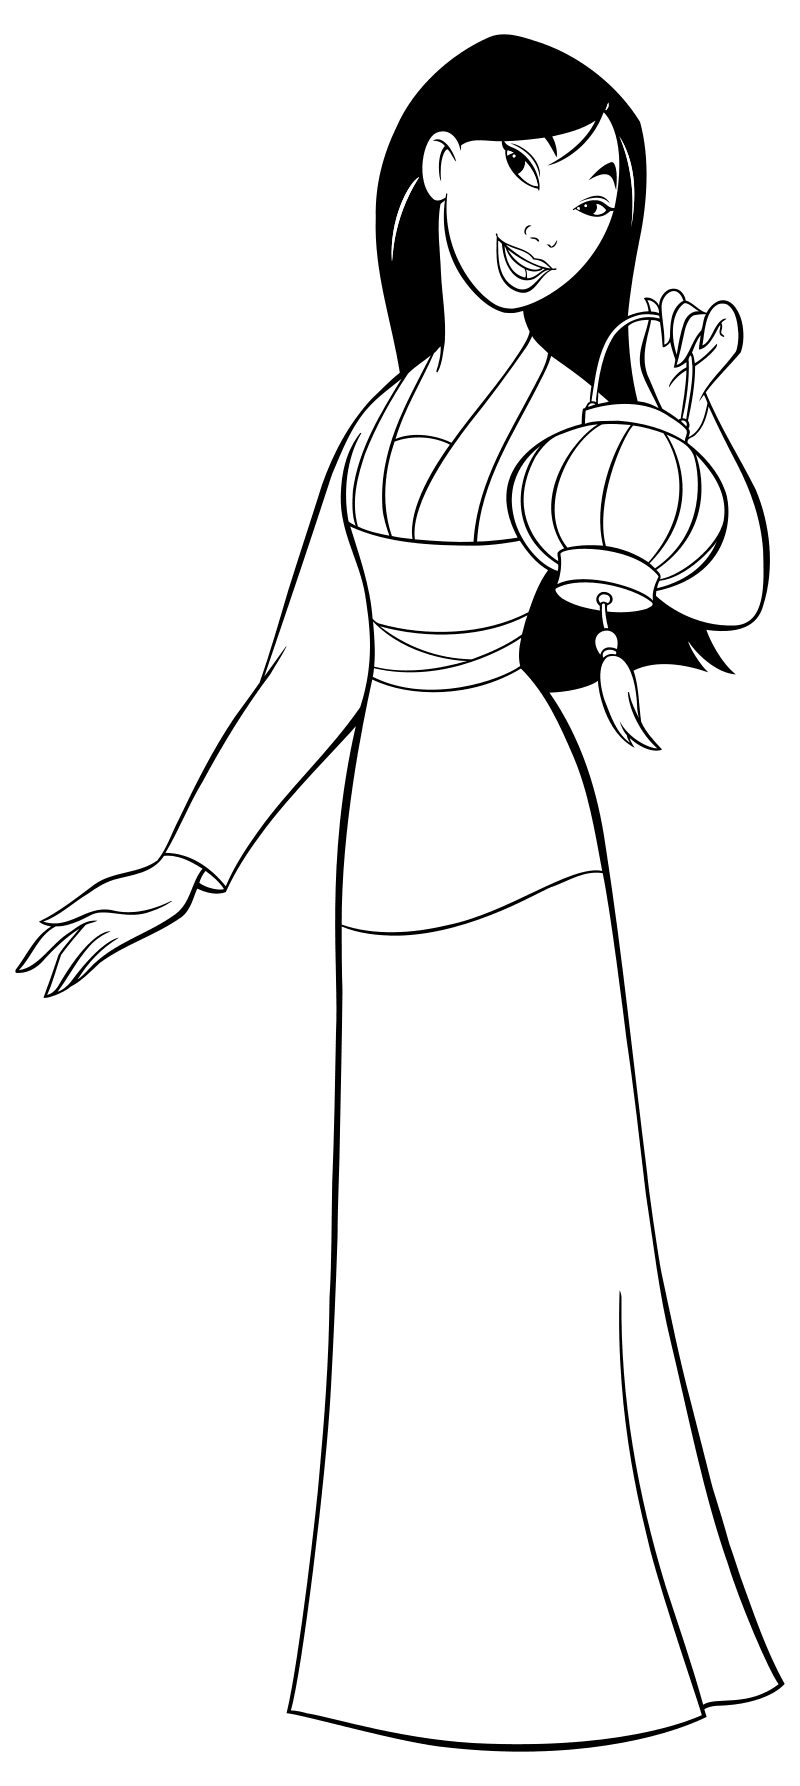 Раскраска - Принцессы Диснея - Мулан с фонарём